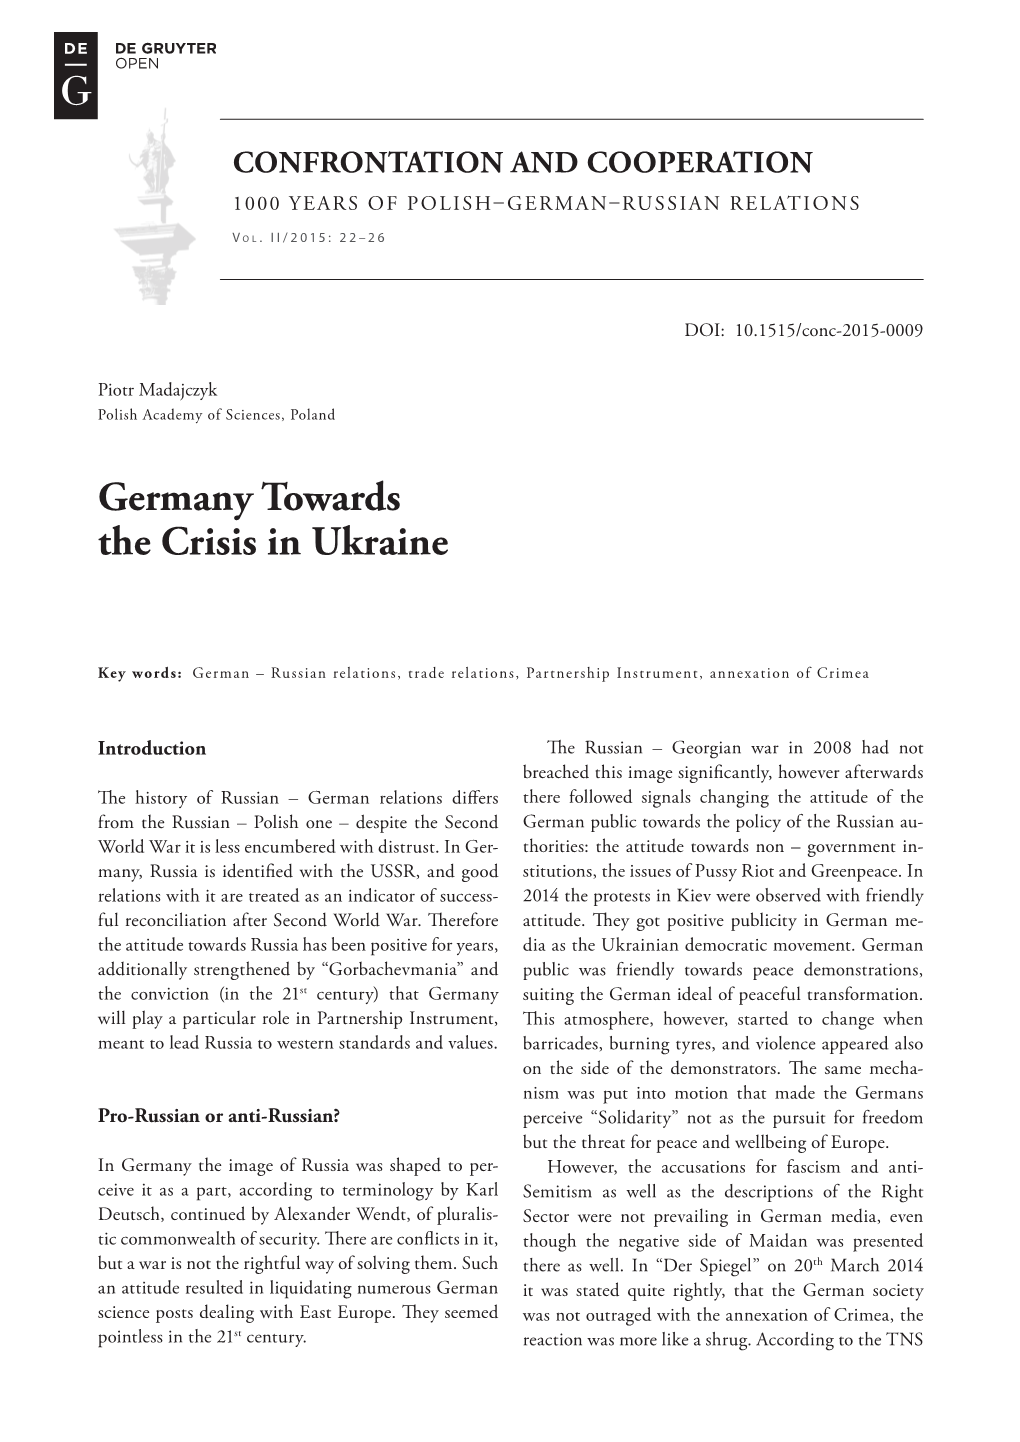 Germany Towards the Crisis in Ukraine